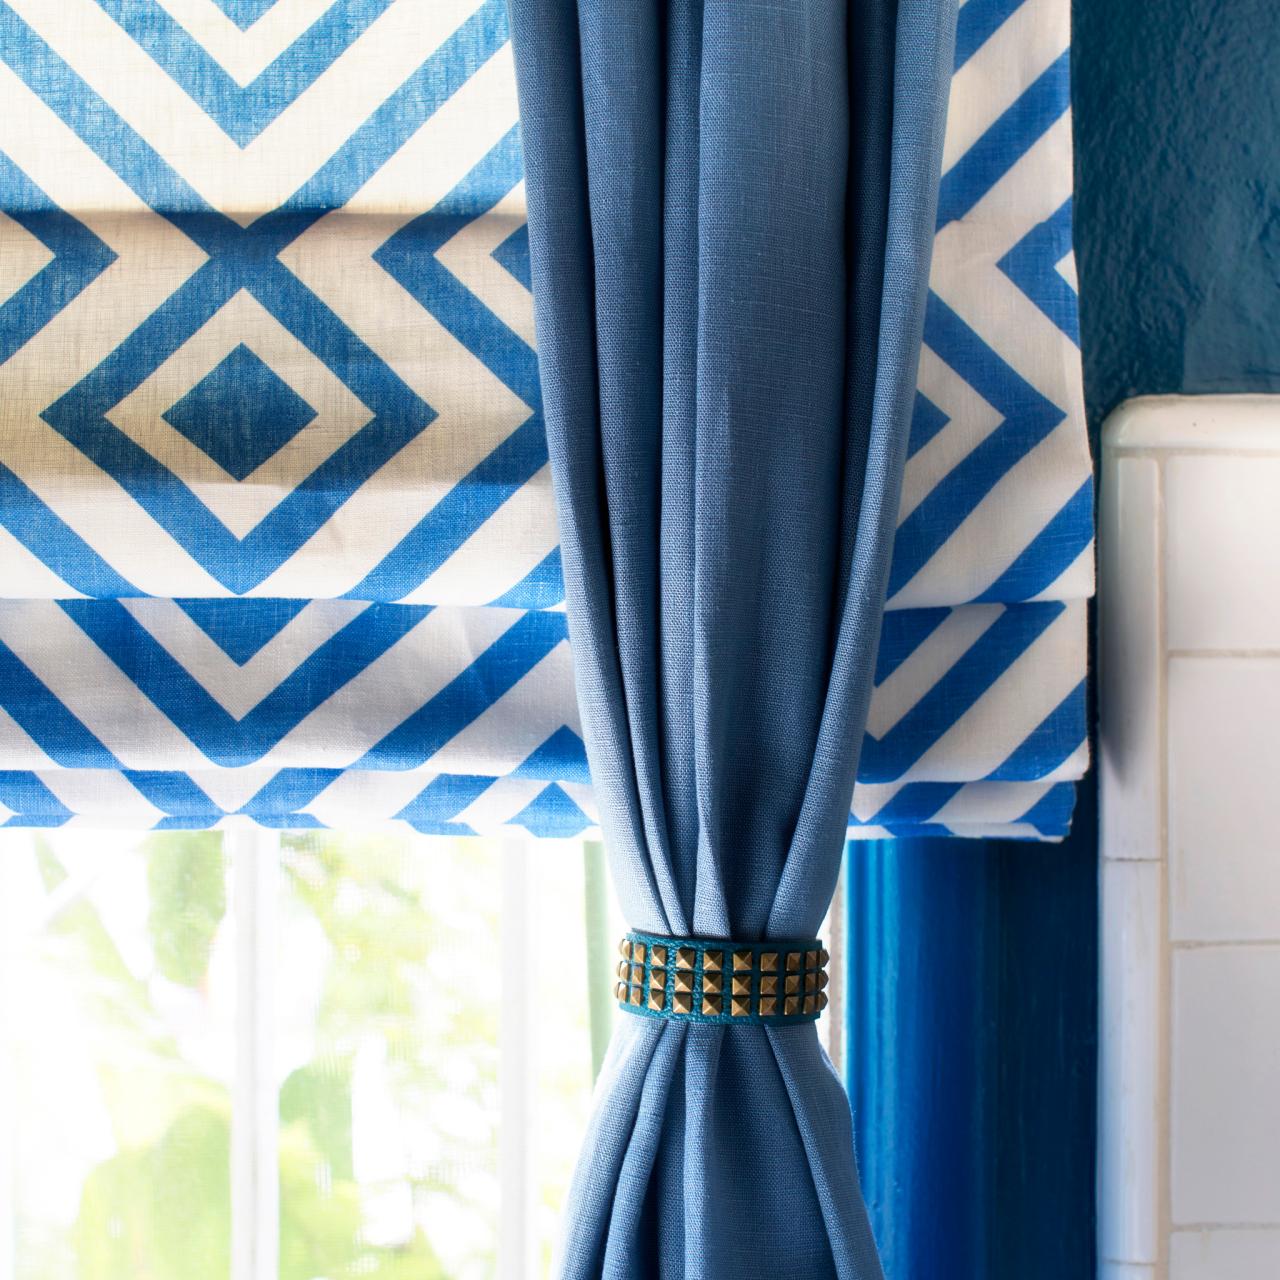 10 Creative Ways To Use Household Items As Curtain Hardware Hgtv